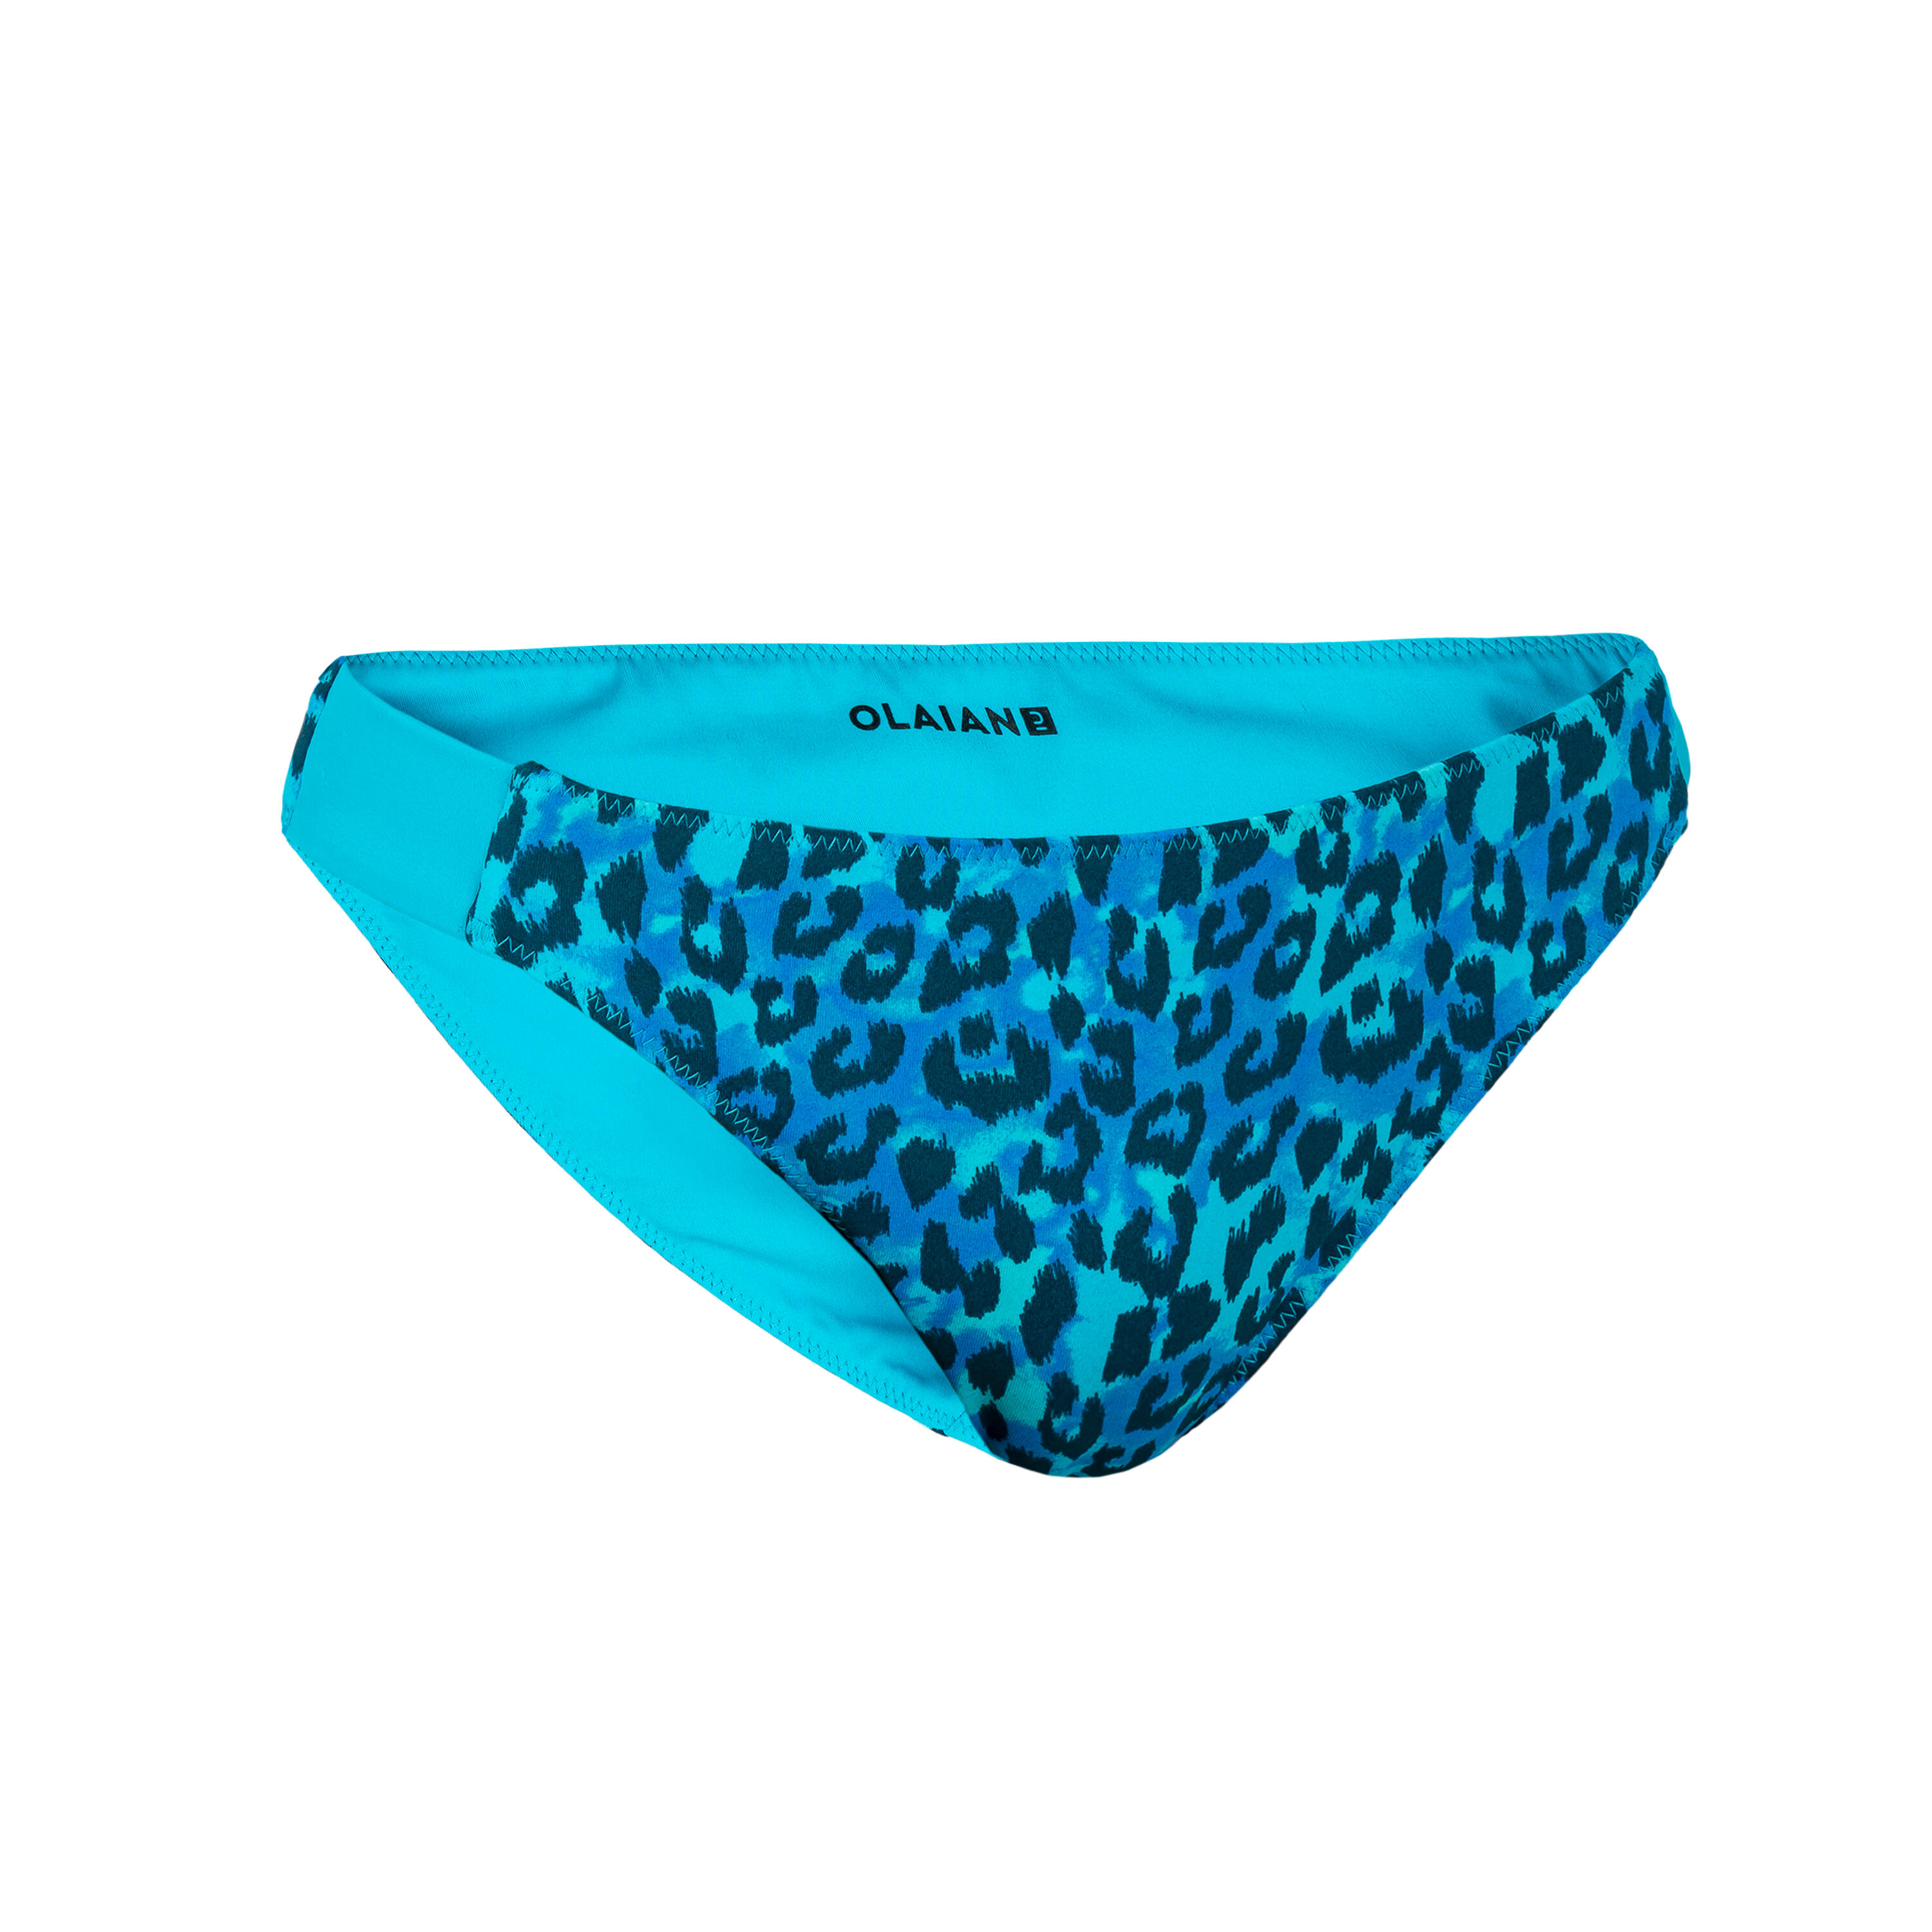 OLAIAN Bikini-Hose Mädchen wendbar - 500 Bella Leopard blau Gr. 140 - 10 Jahre